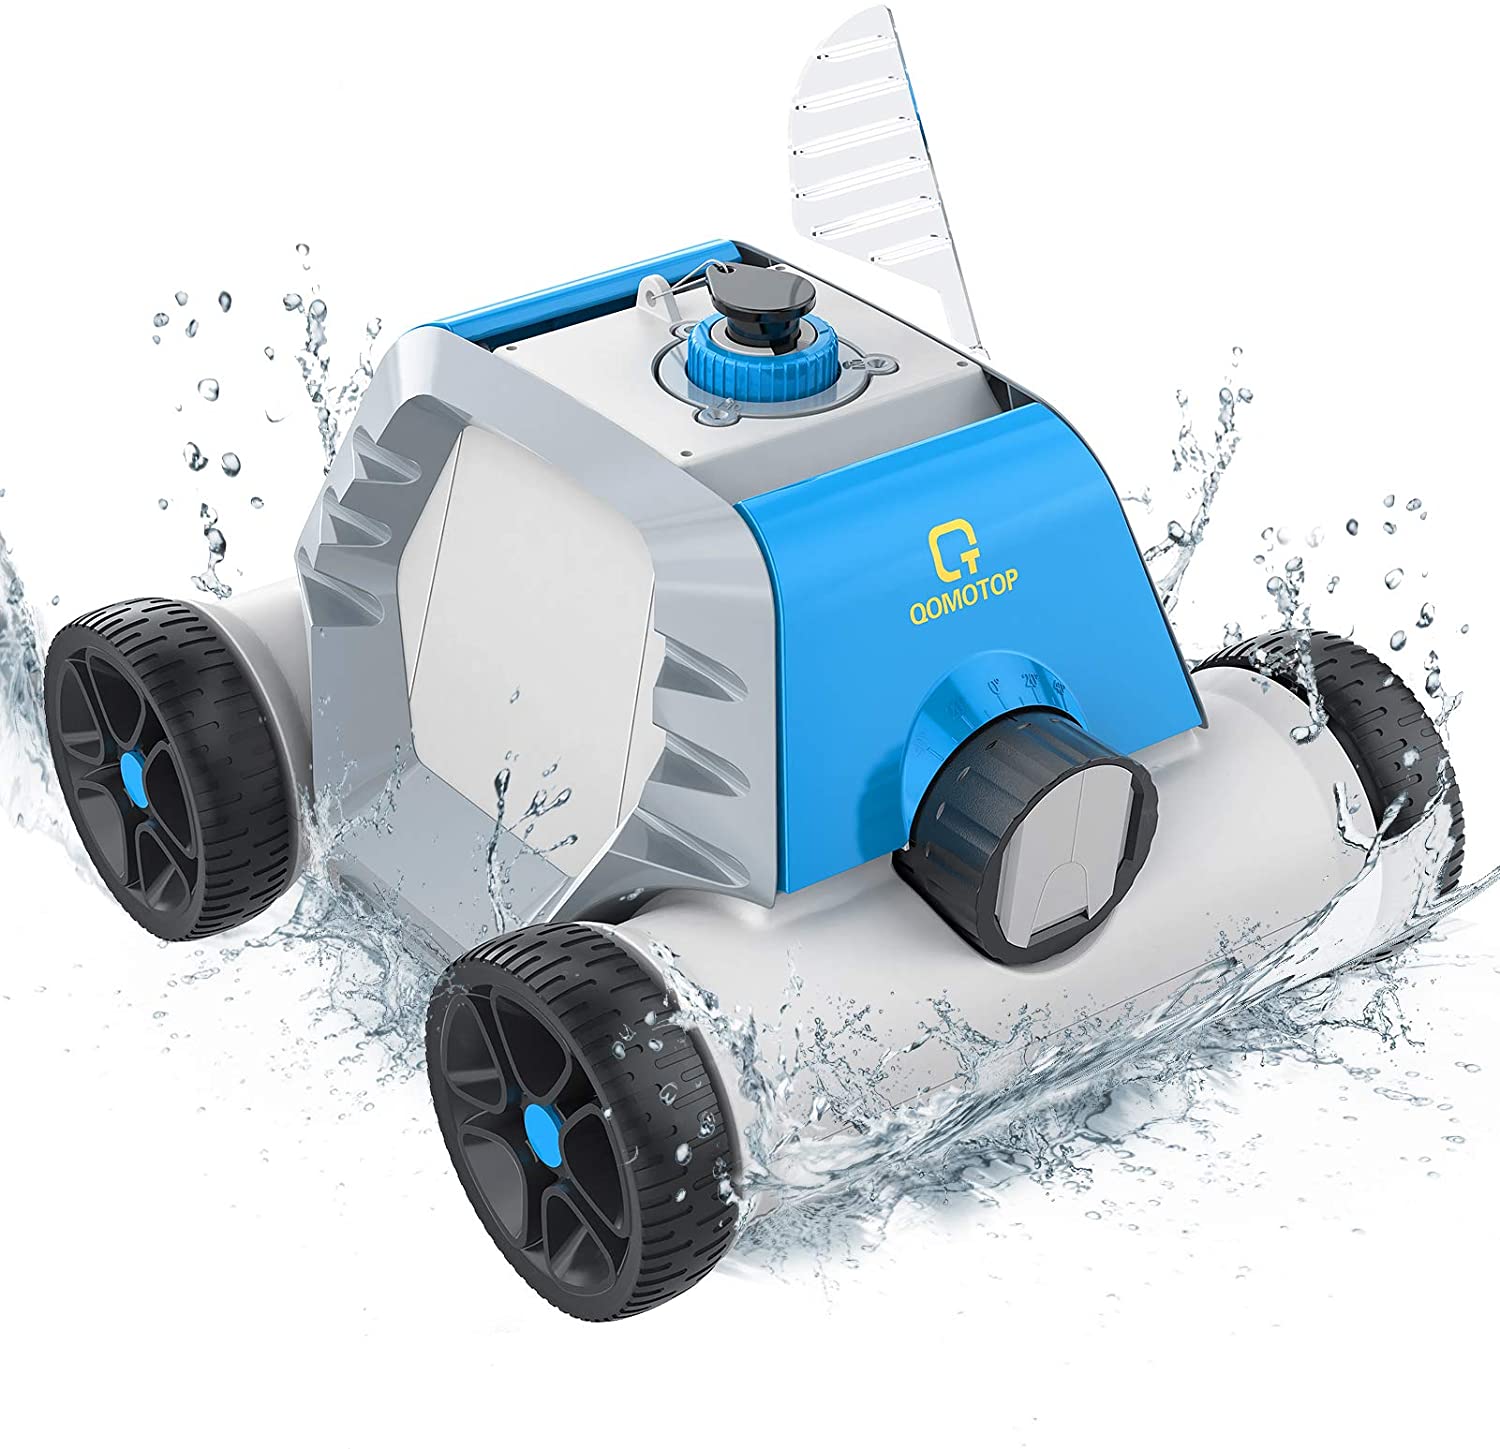 OT QOMOTOP Robotic Pool Cleaner With Water Sensor Technology